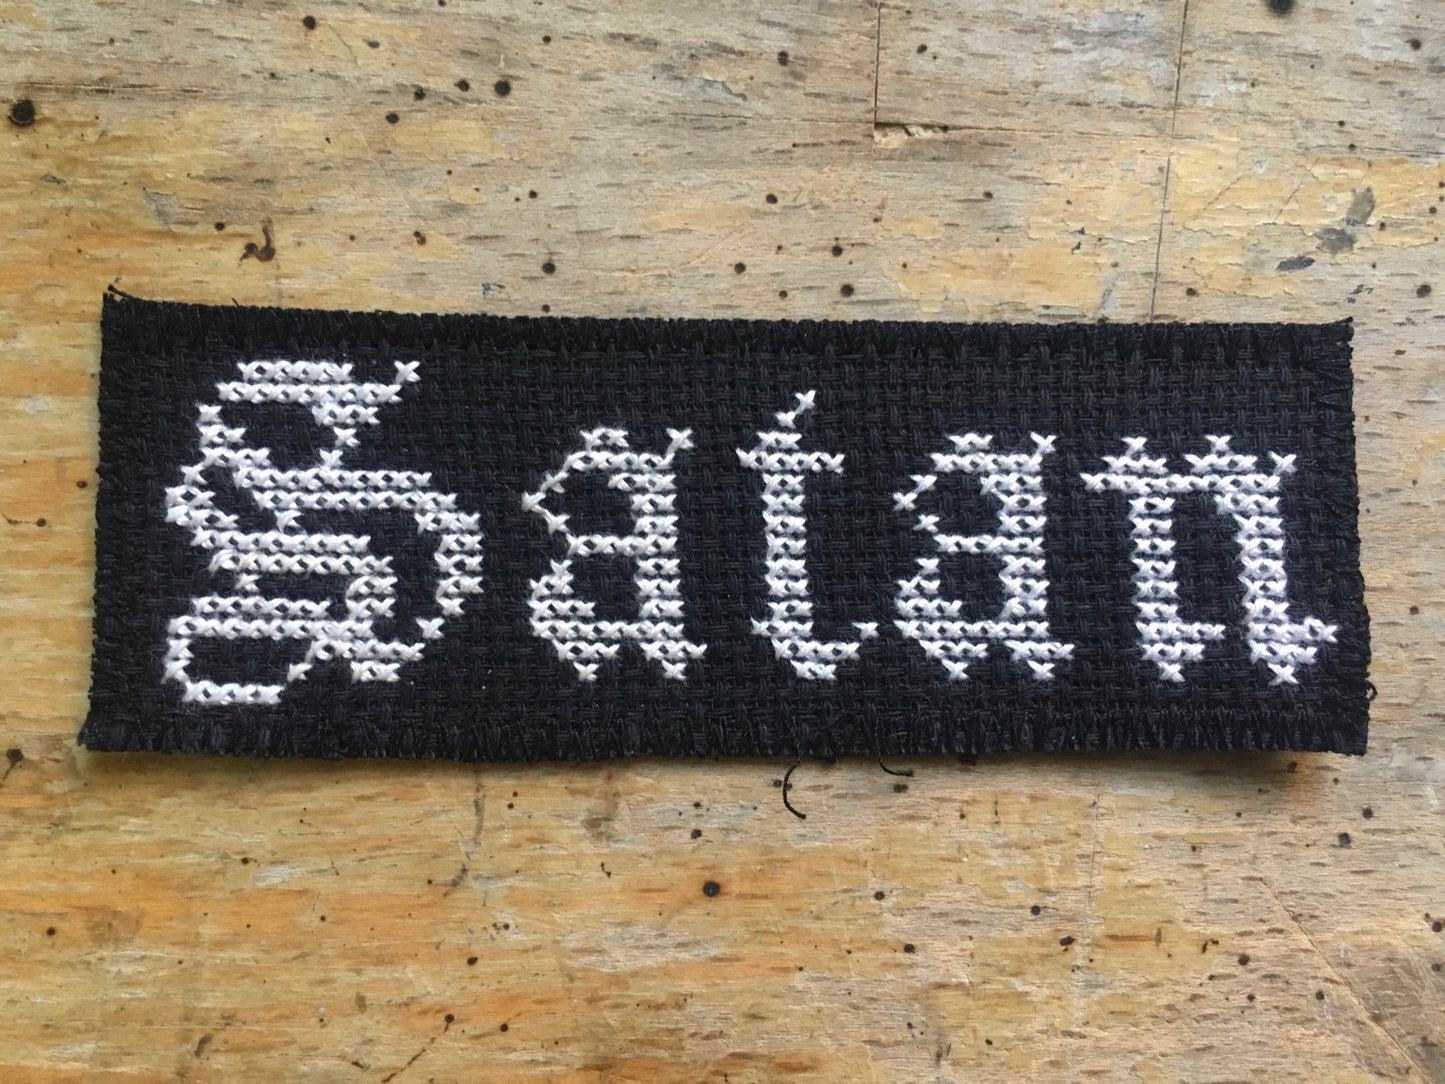 Satan - Hand-embroidered Patch - Sajko Art